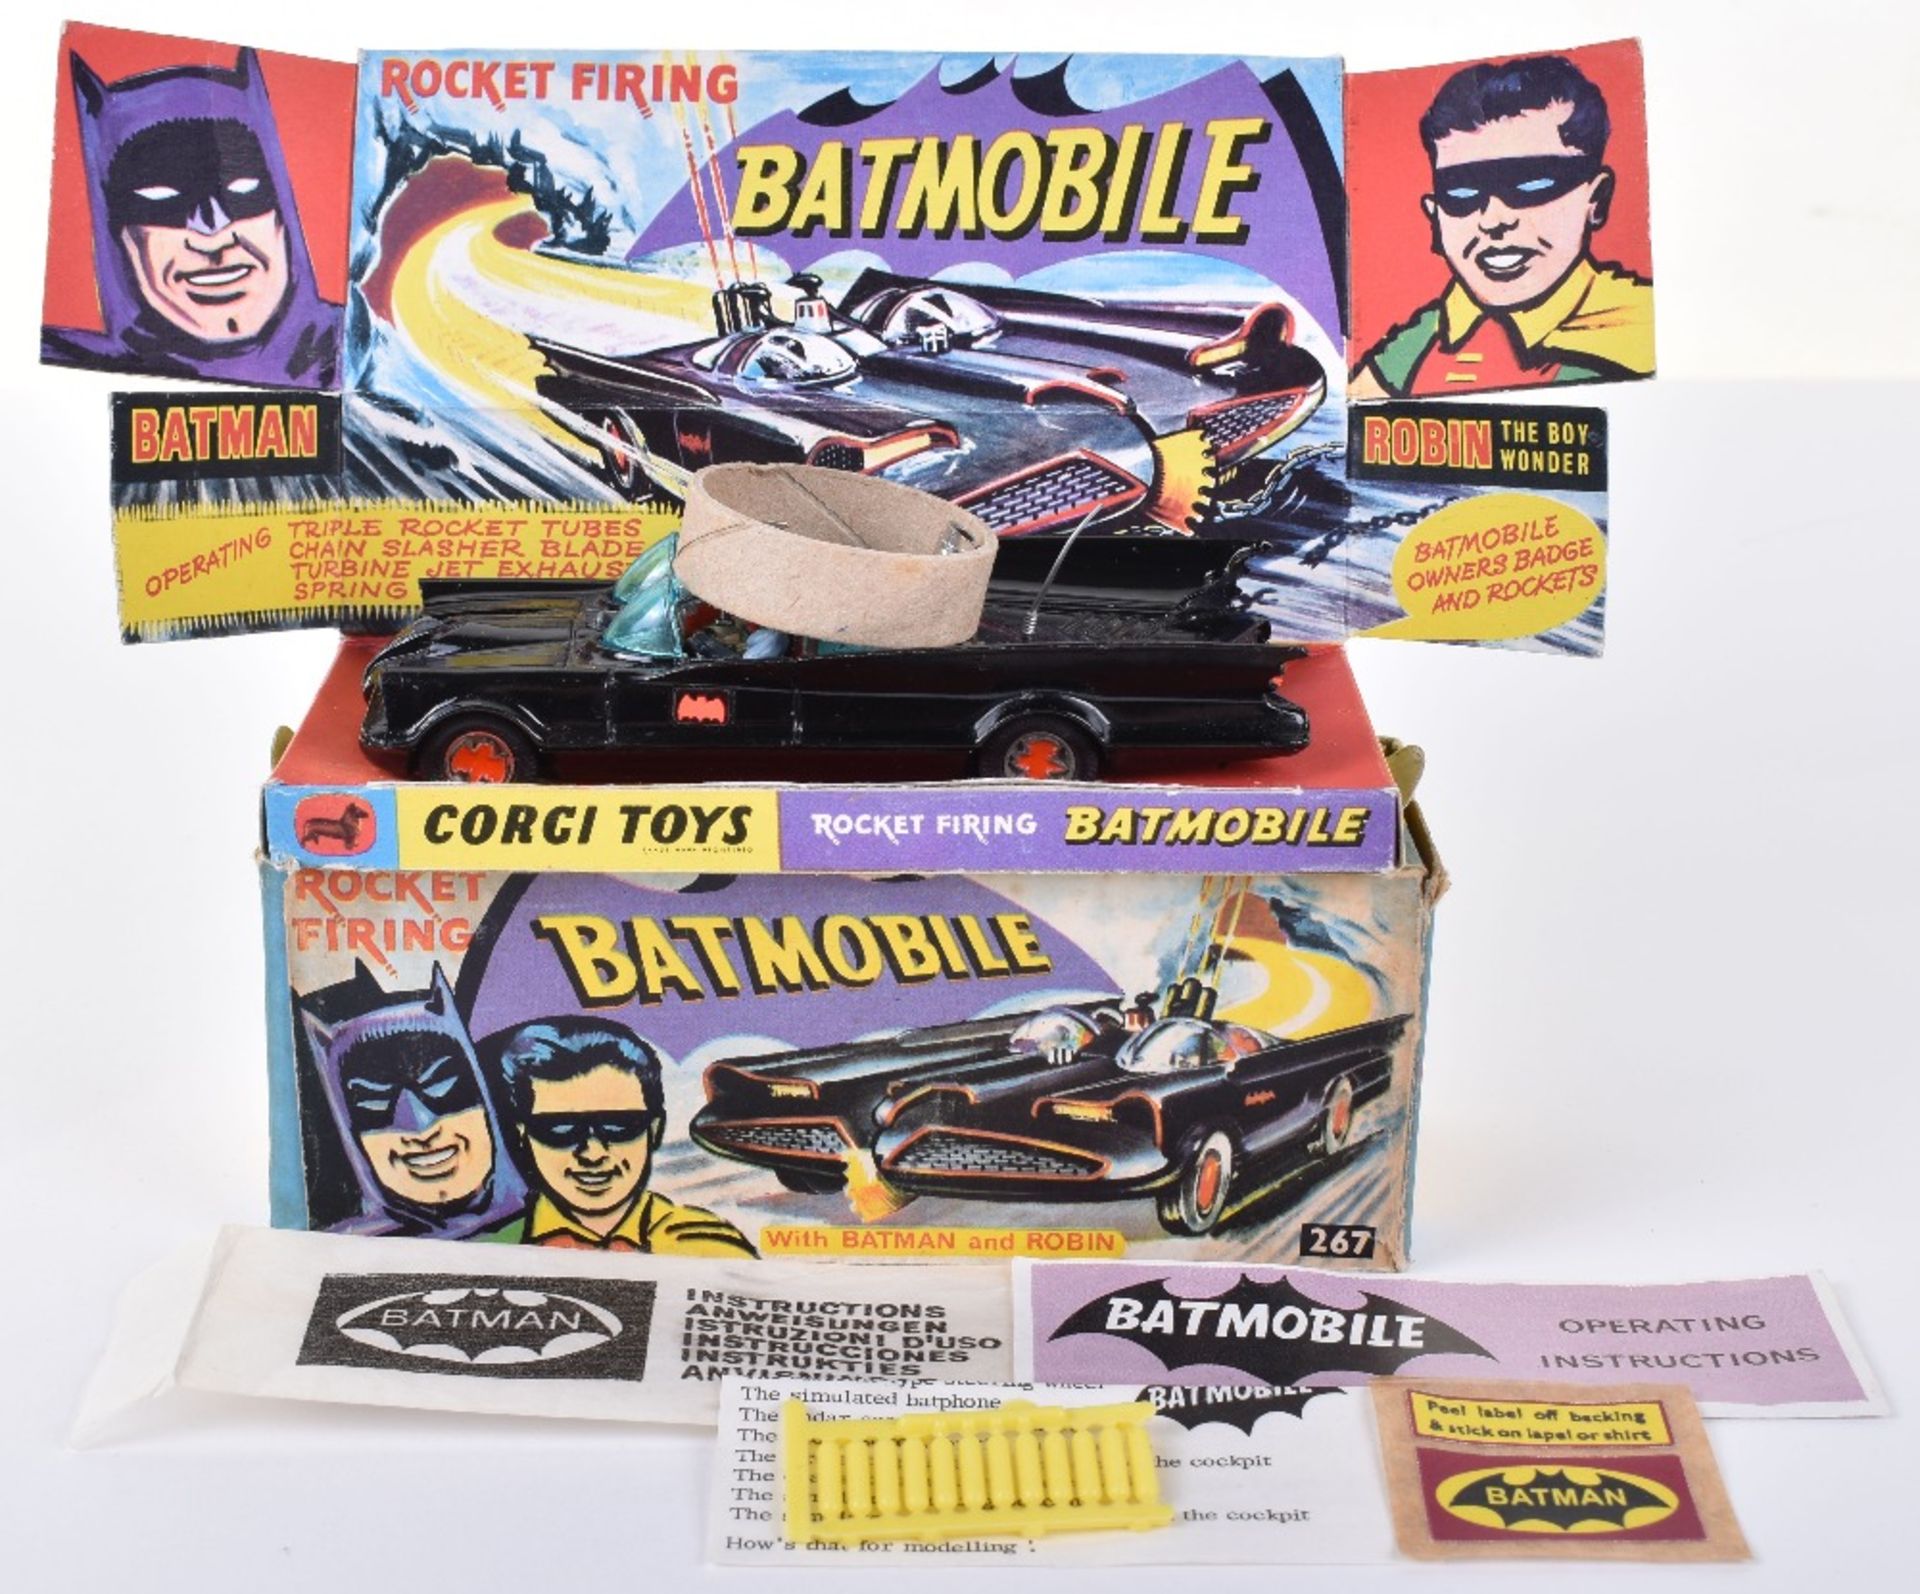 Corgi Toys 267 Rocket Firing Batmobile - Image 2 of 7